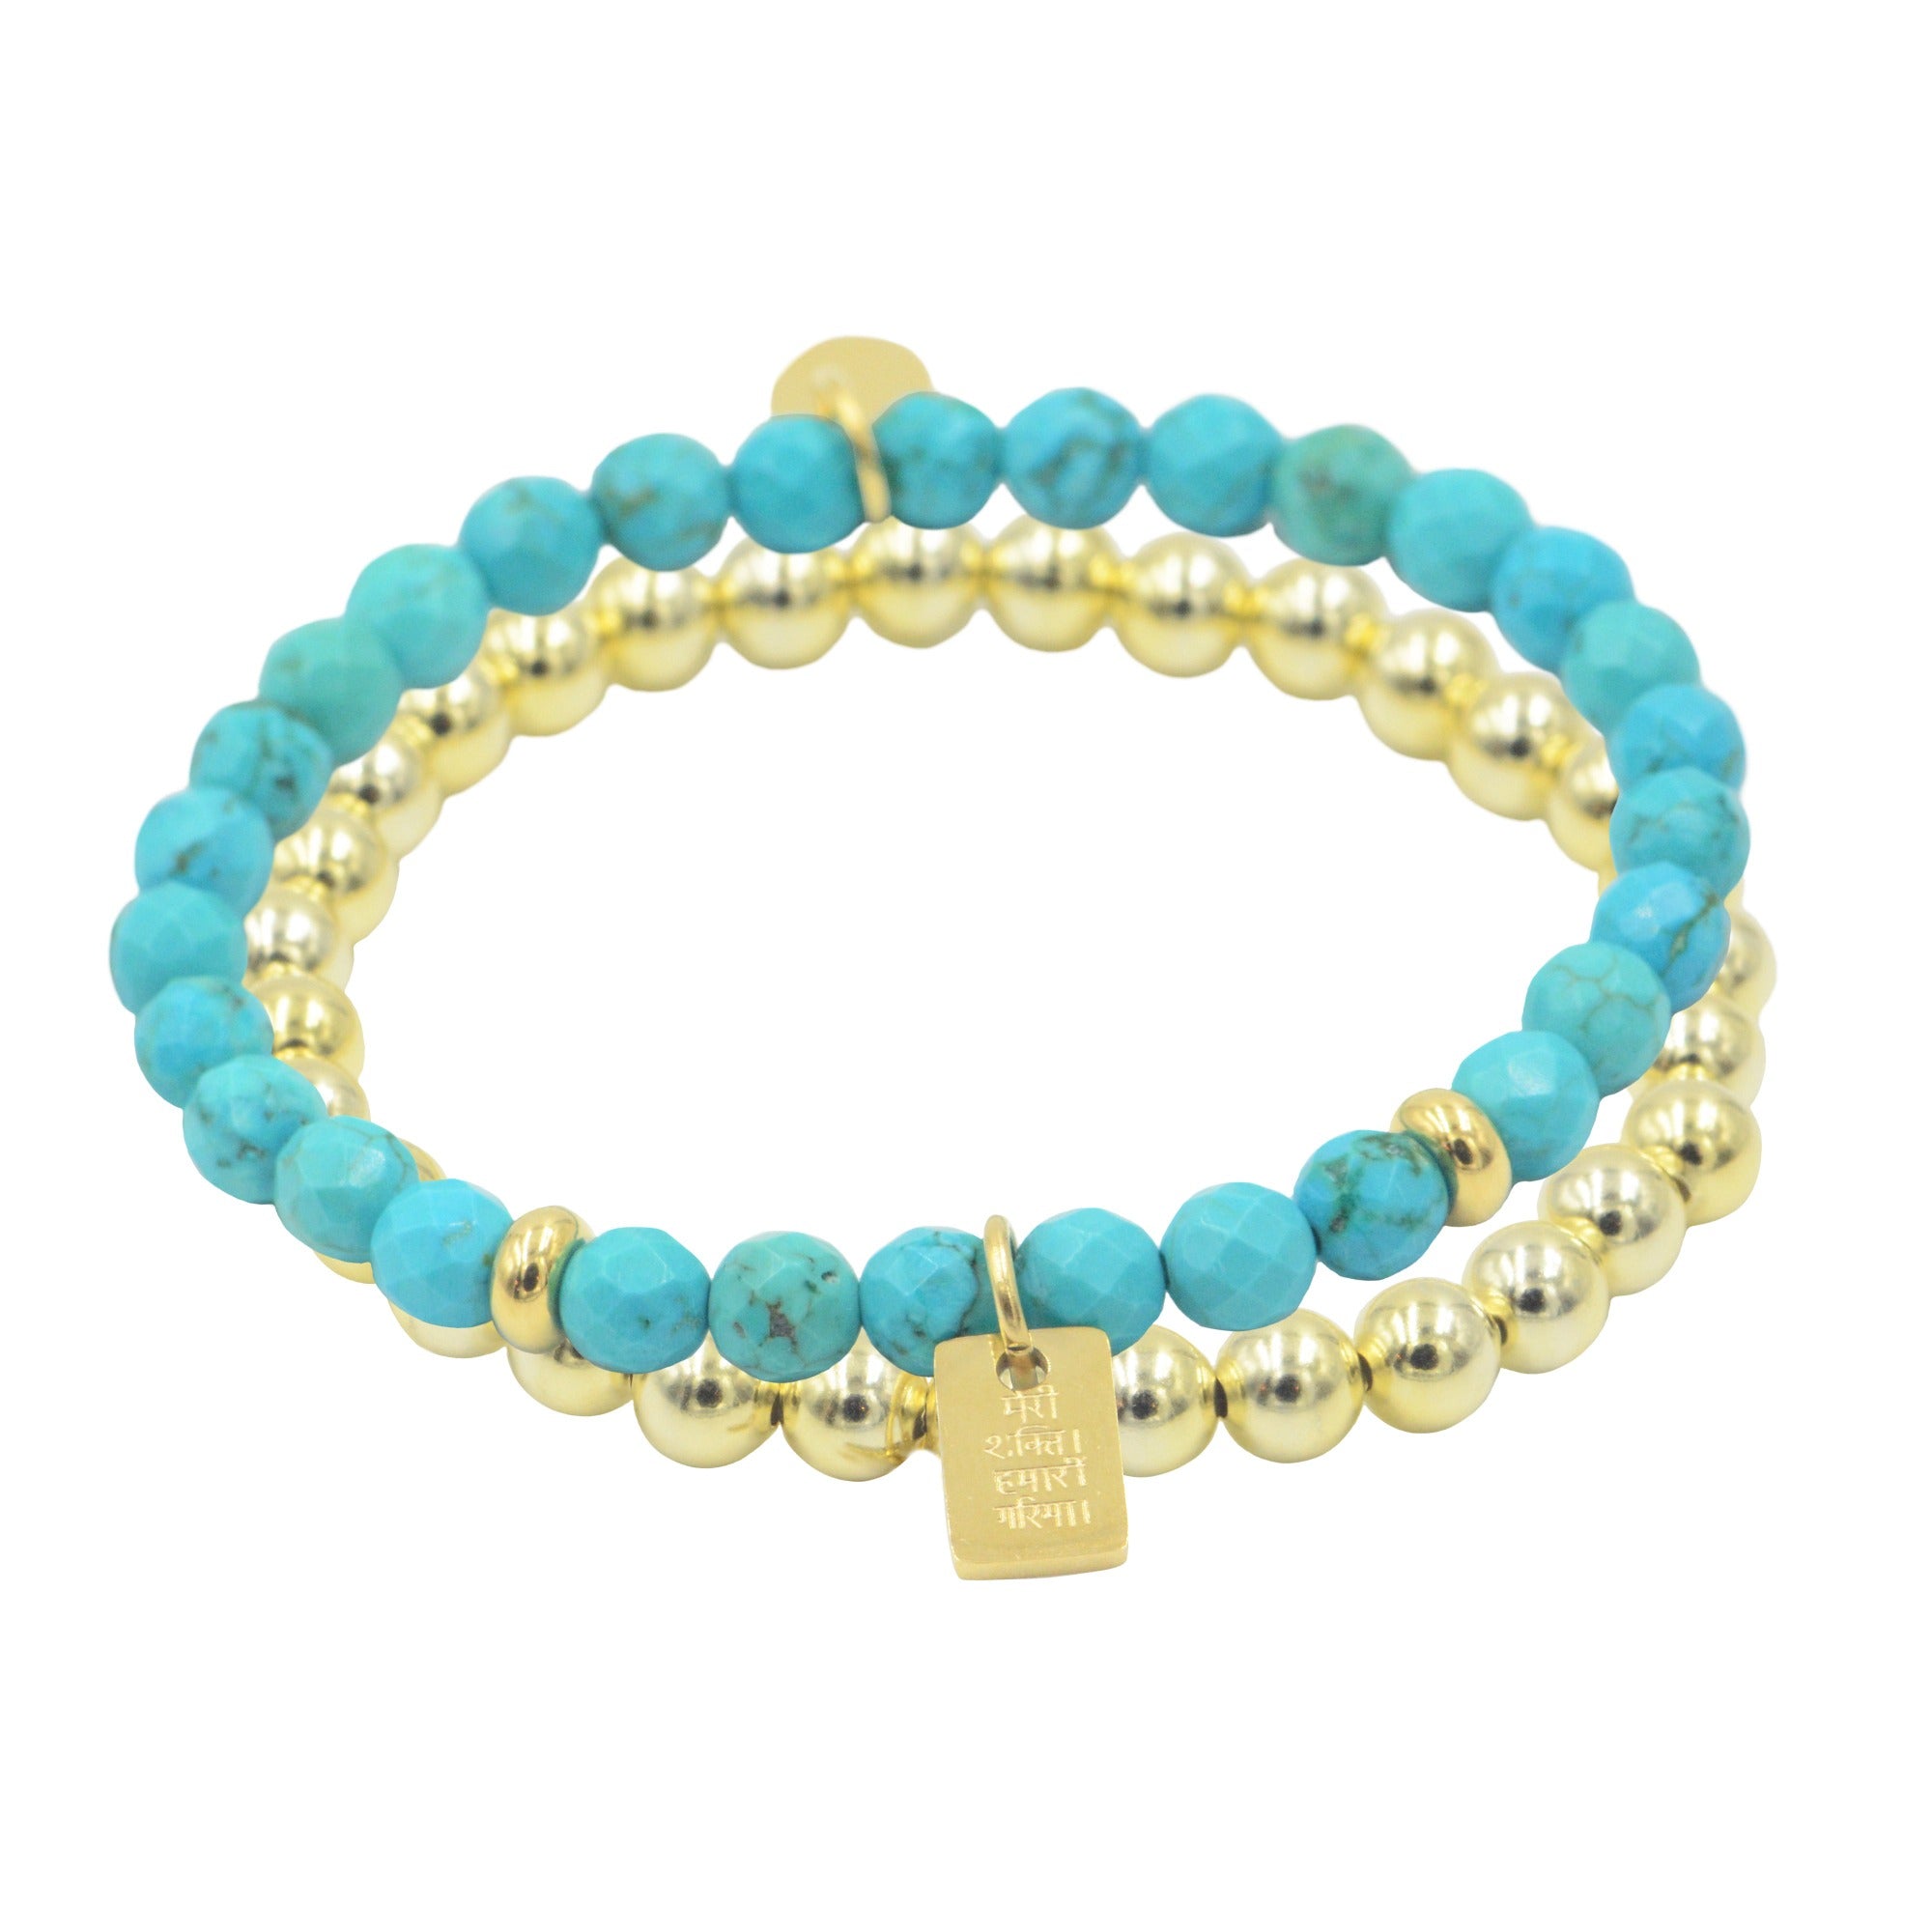 6mm turquoise gold bracelet stack